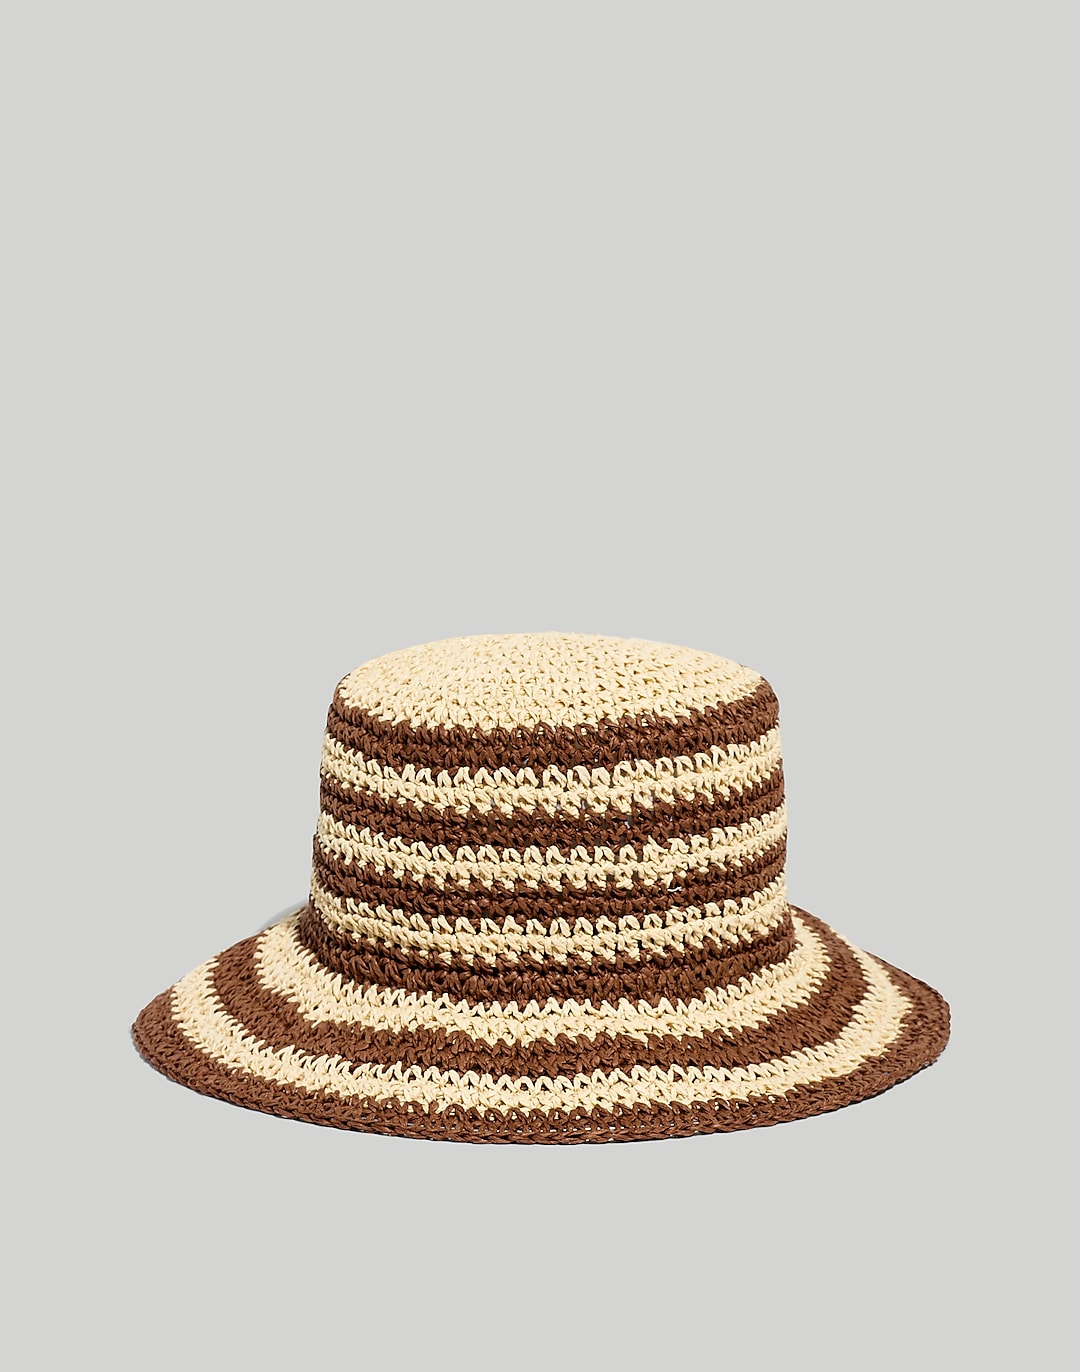 Madewell Straw Bucket Hat in Soft Mahogany - Size M-L